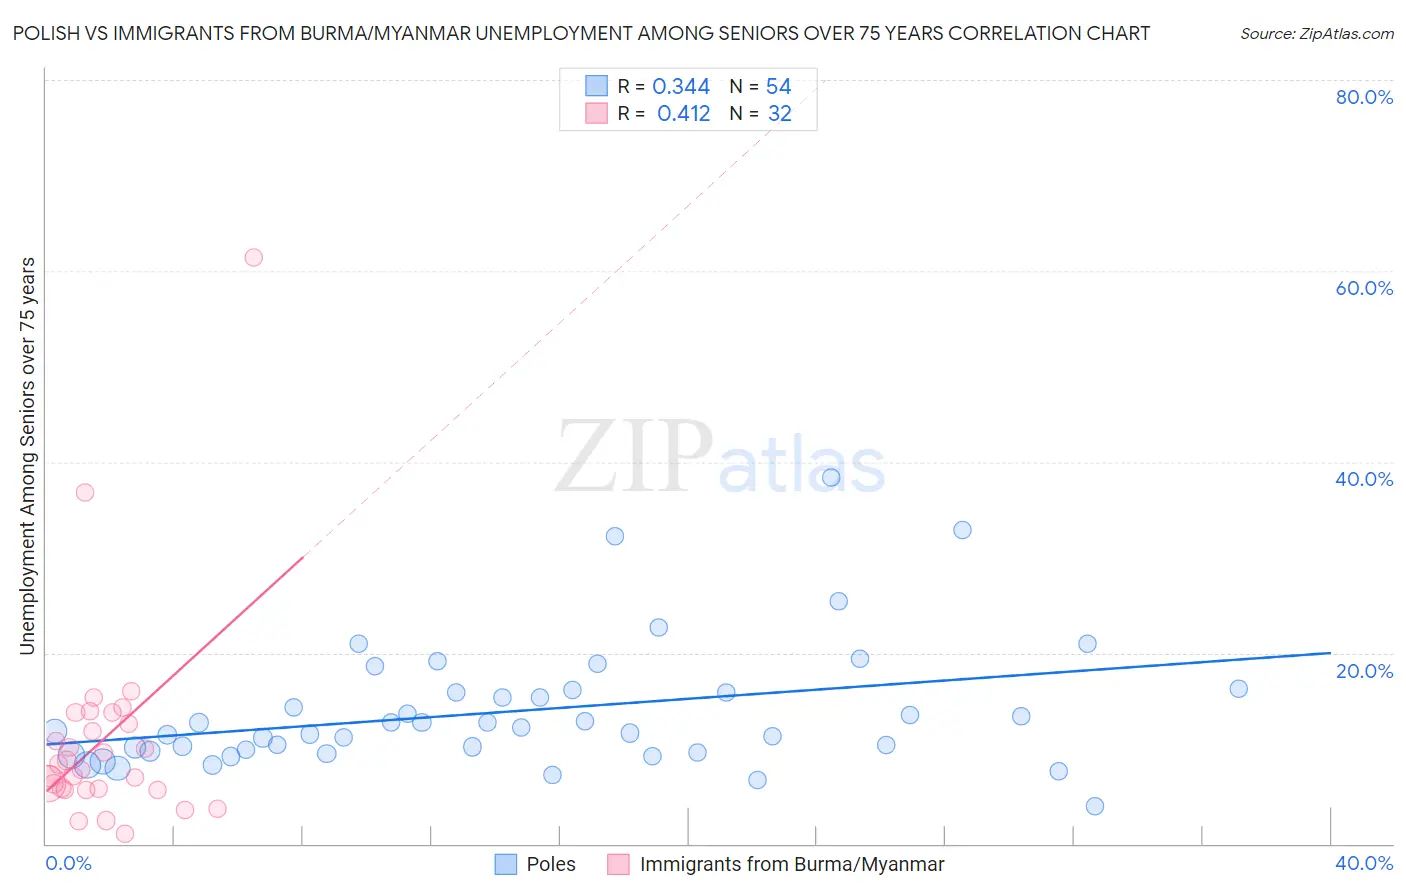 Polish vs Immigrants from Burma/Myanmar Unemployment Among Seniors over 75 years